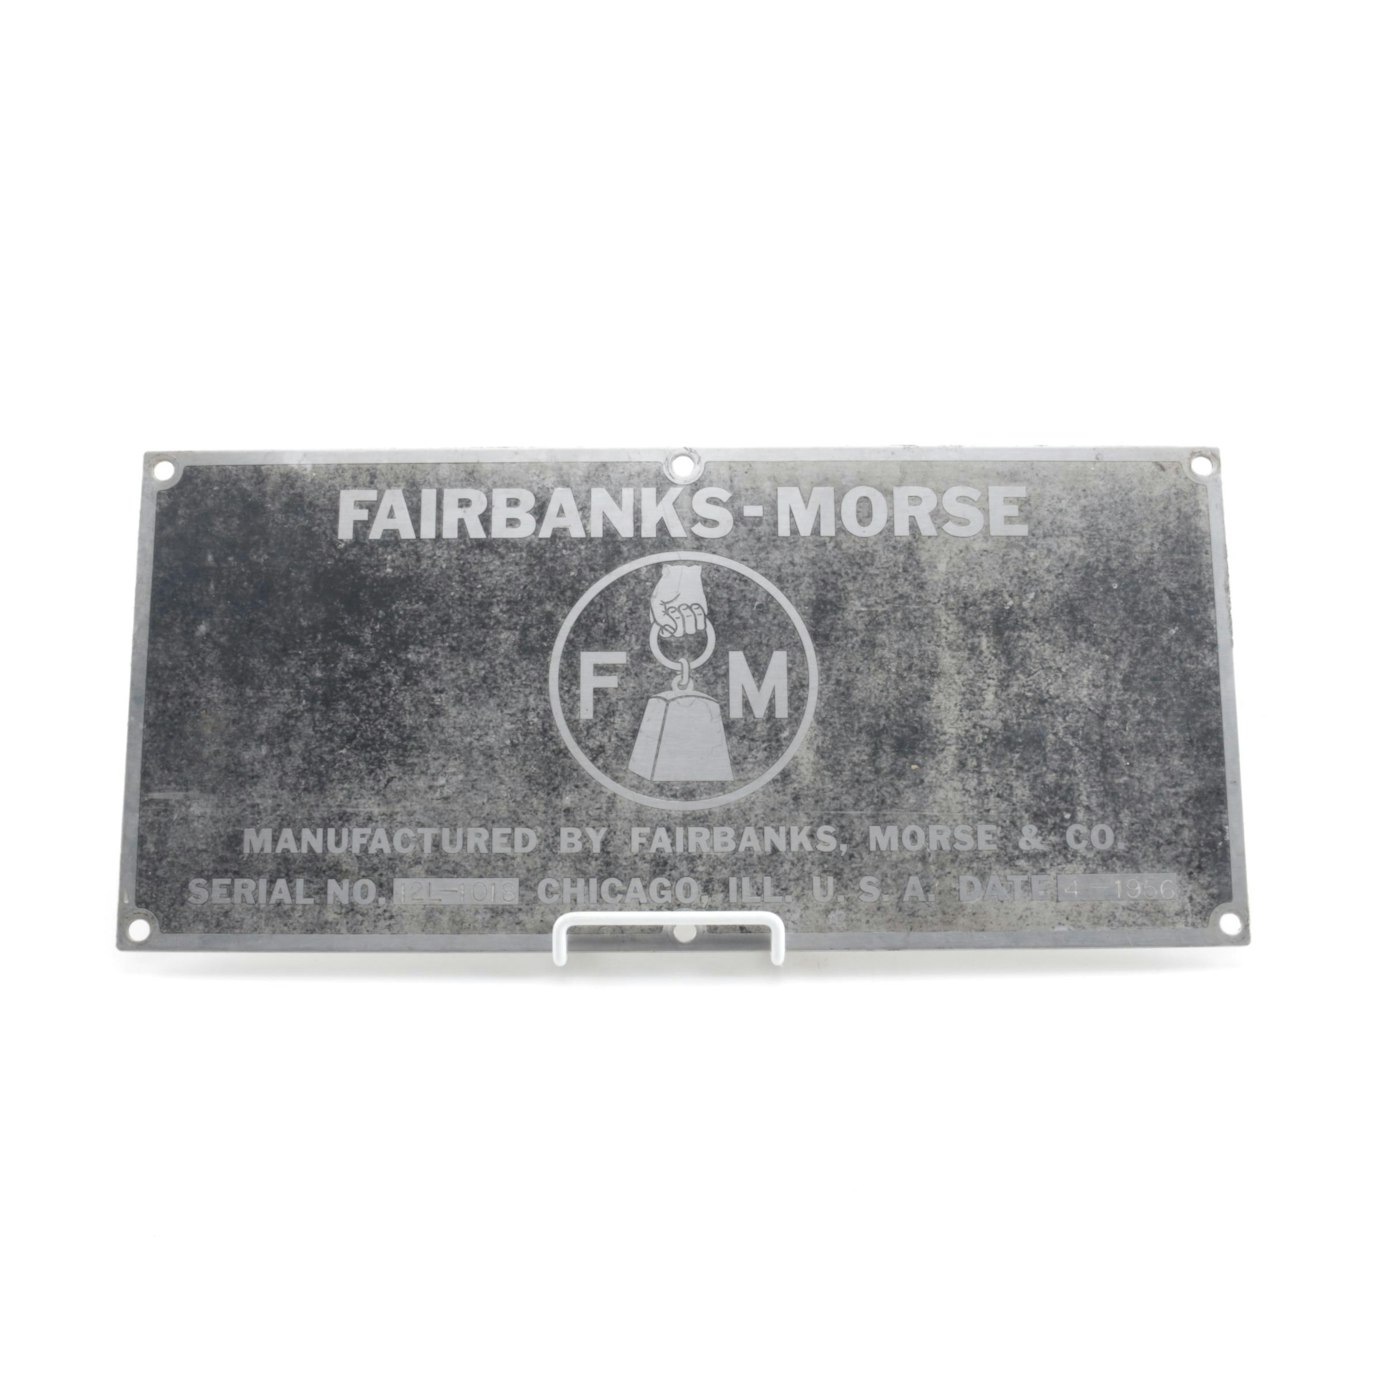 Fairbanks morse engine identification